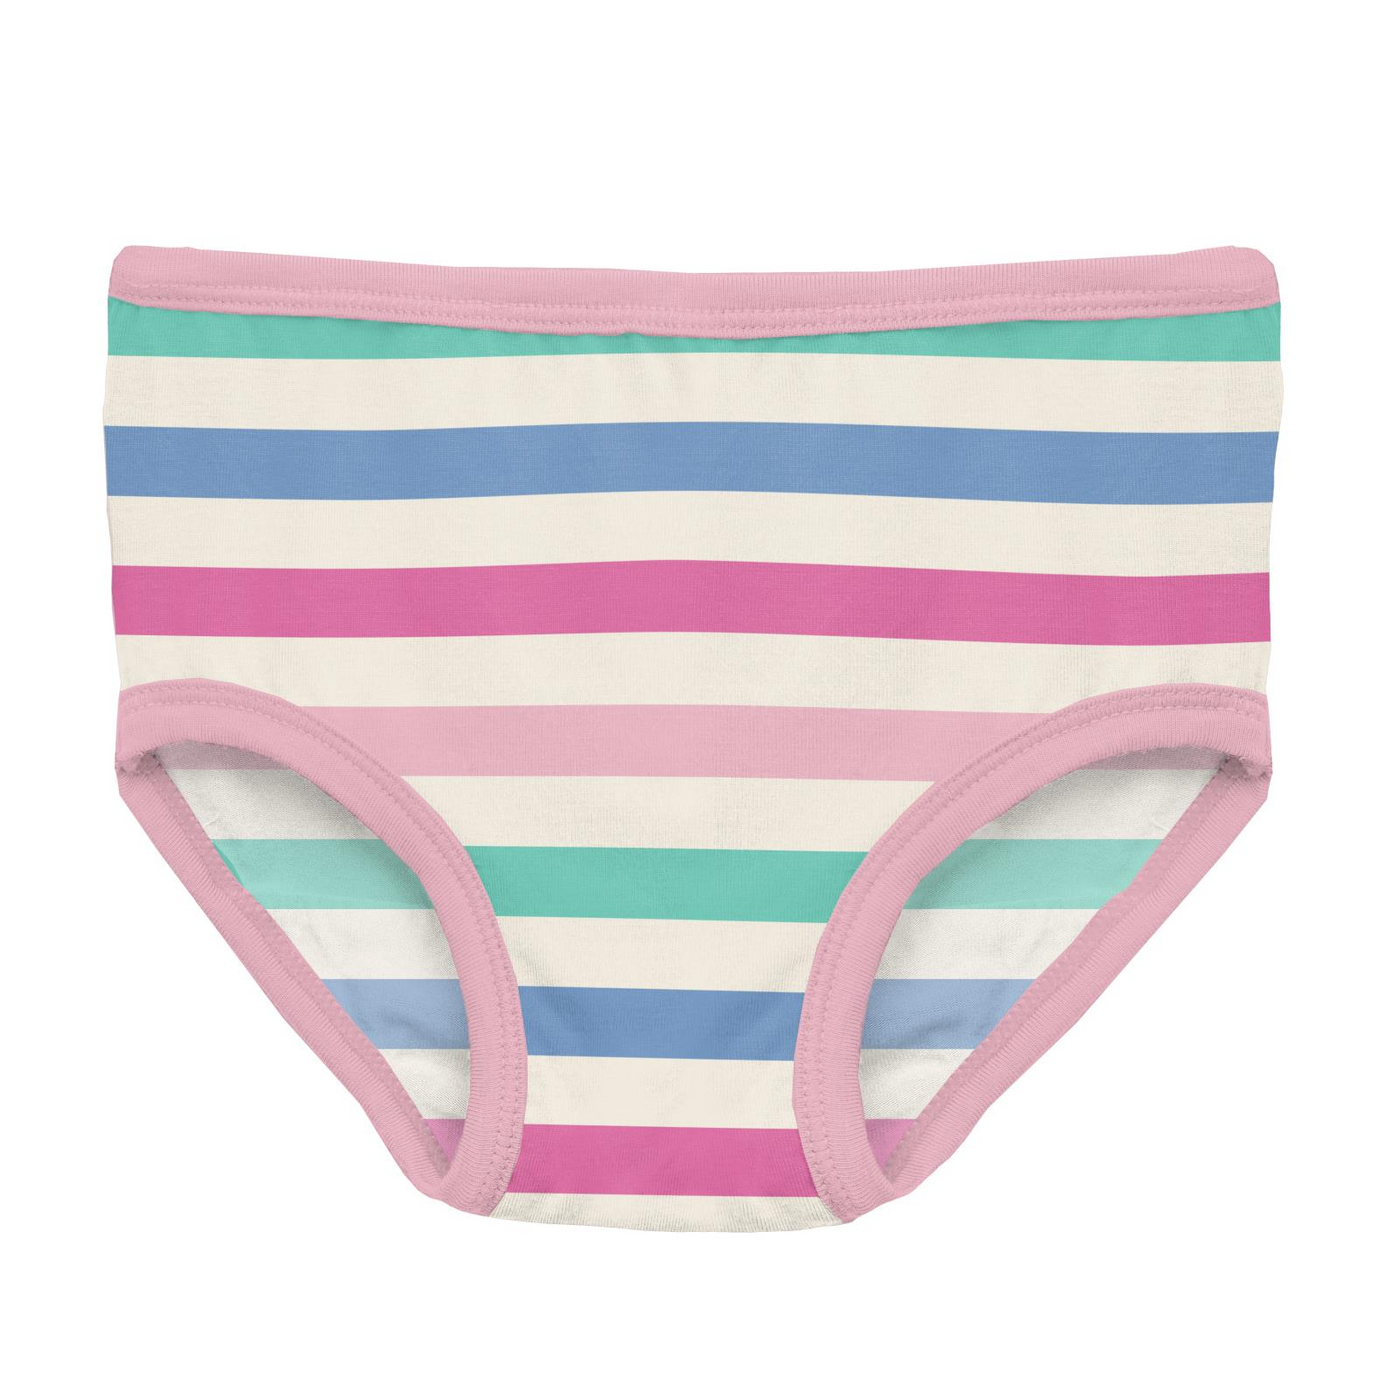 Kickee Pants Girl's Underwear: Skip To My Lou Stripe